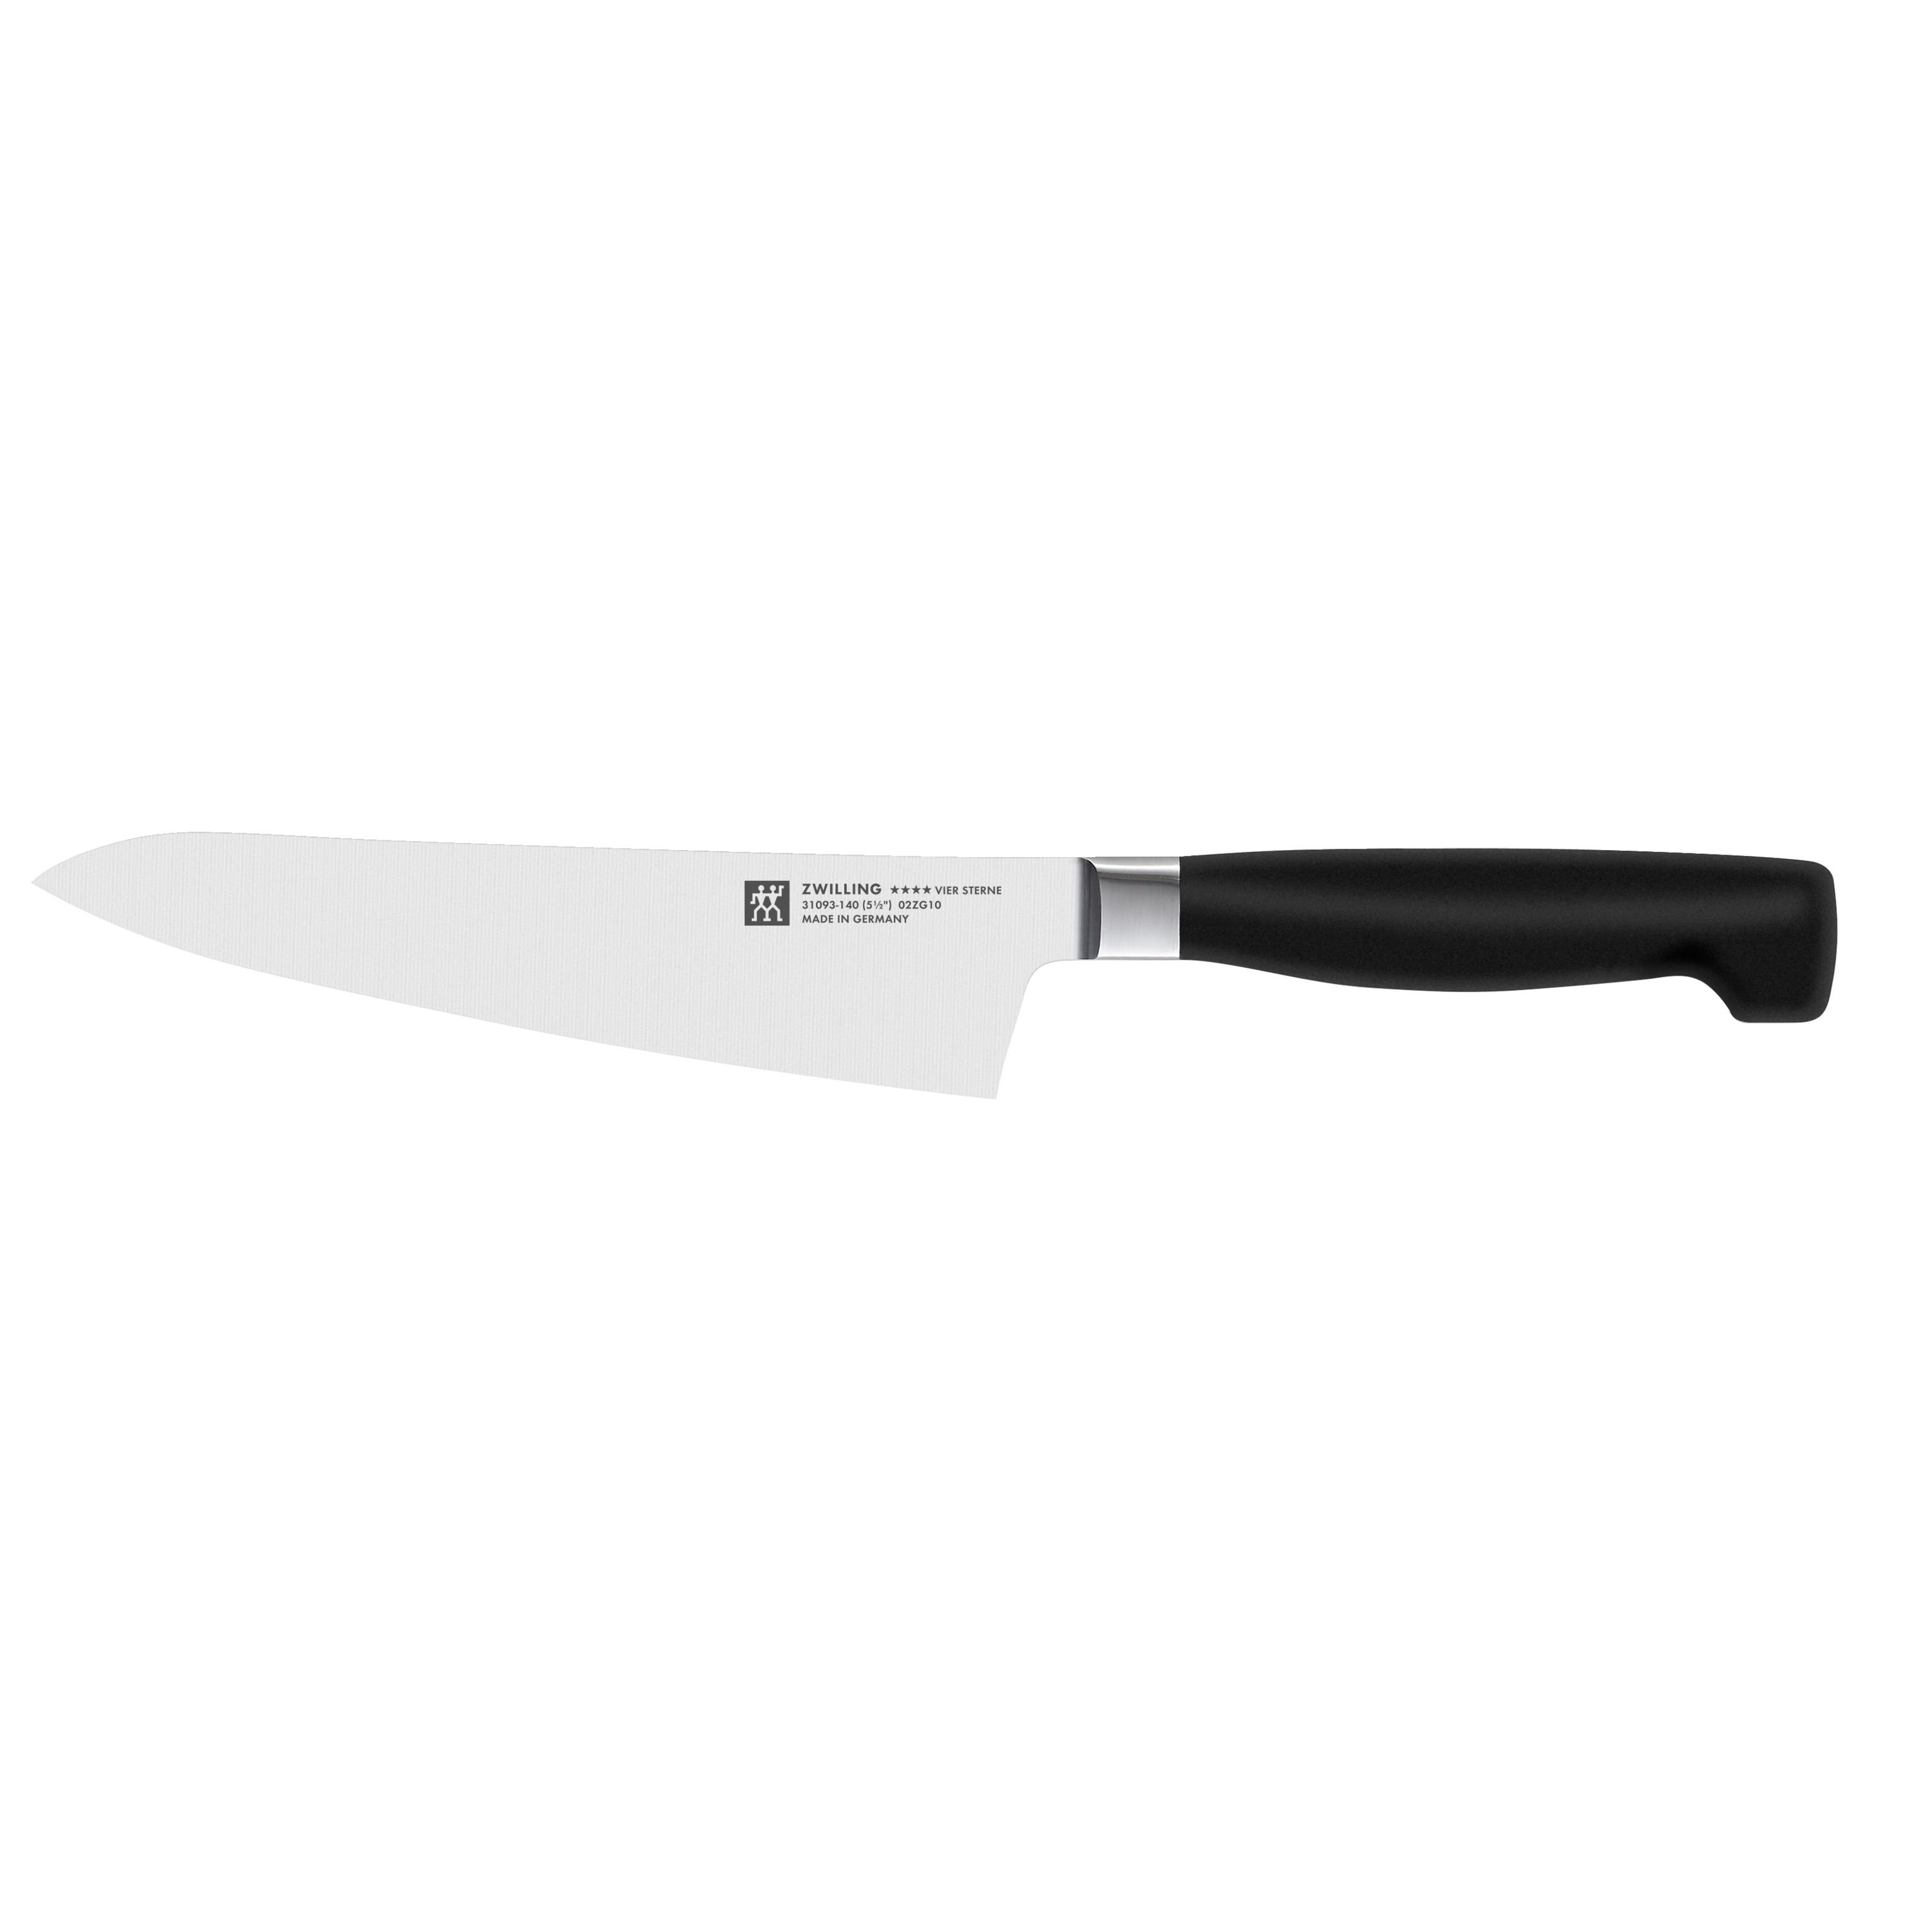 Knife Blockscissor Essentials: Slice & Dice with Ease